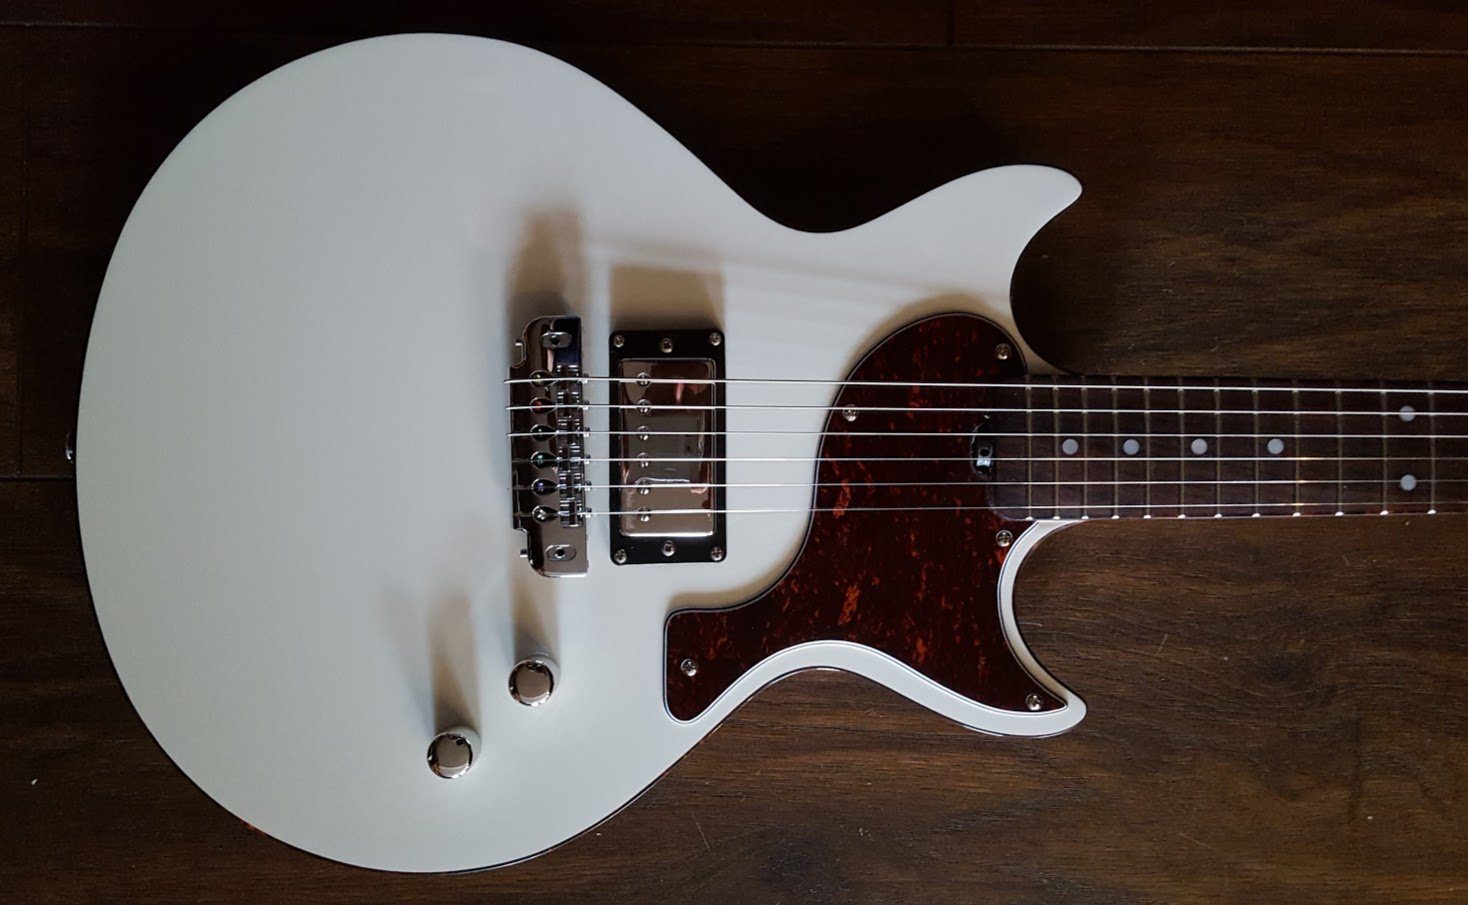 Gordon Smith GS1000 Vintage White, Electric Guitar for sale at Richards Guitars.